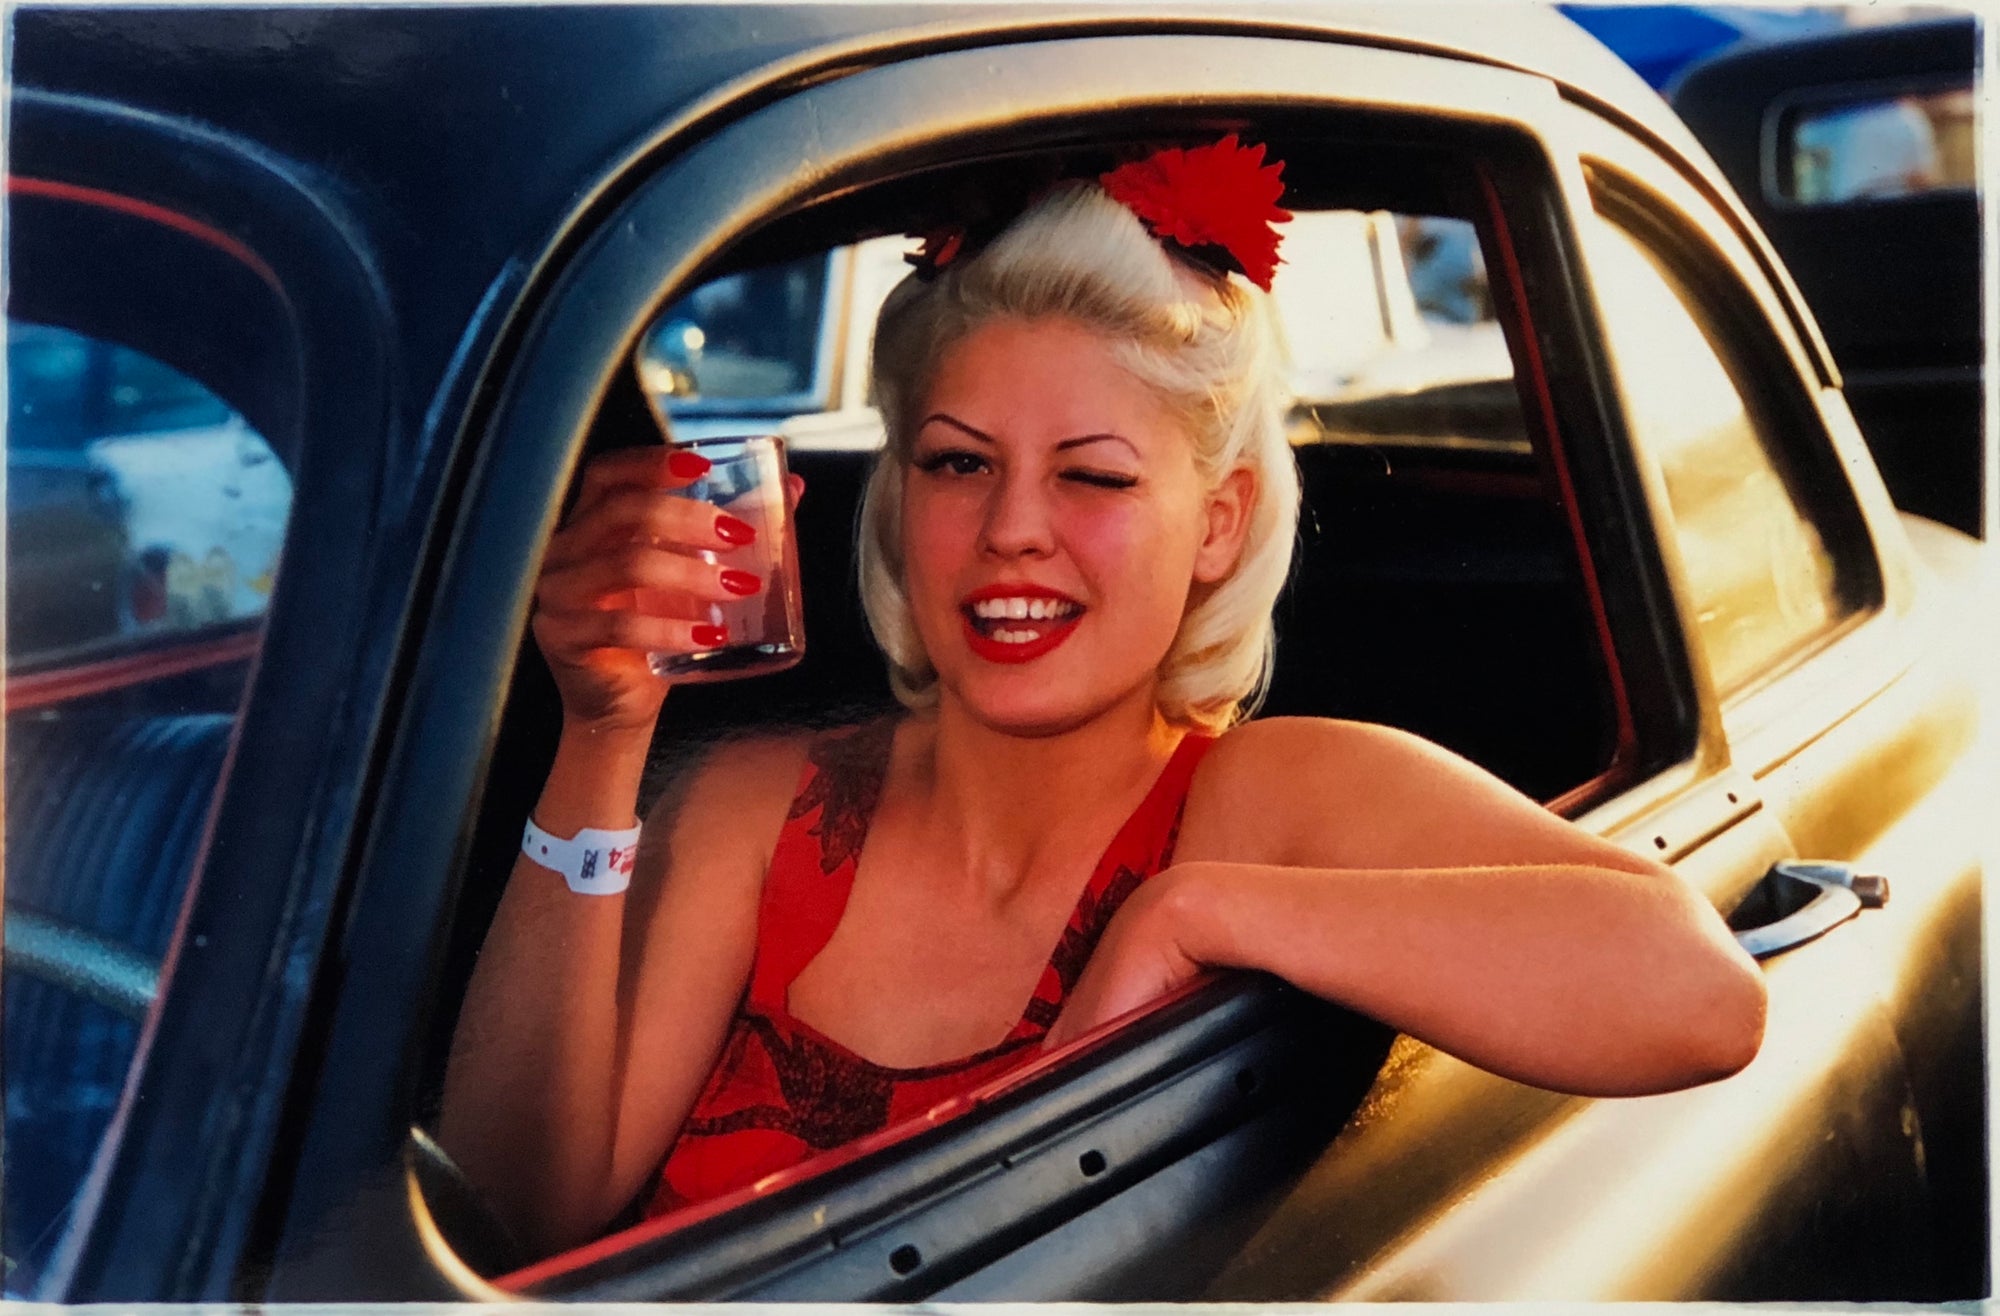 Lisa 'drag strip girl', Las Vegas, 2000